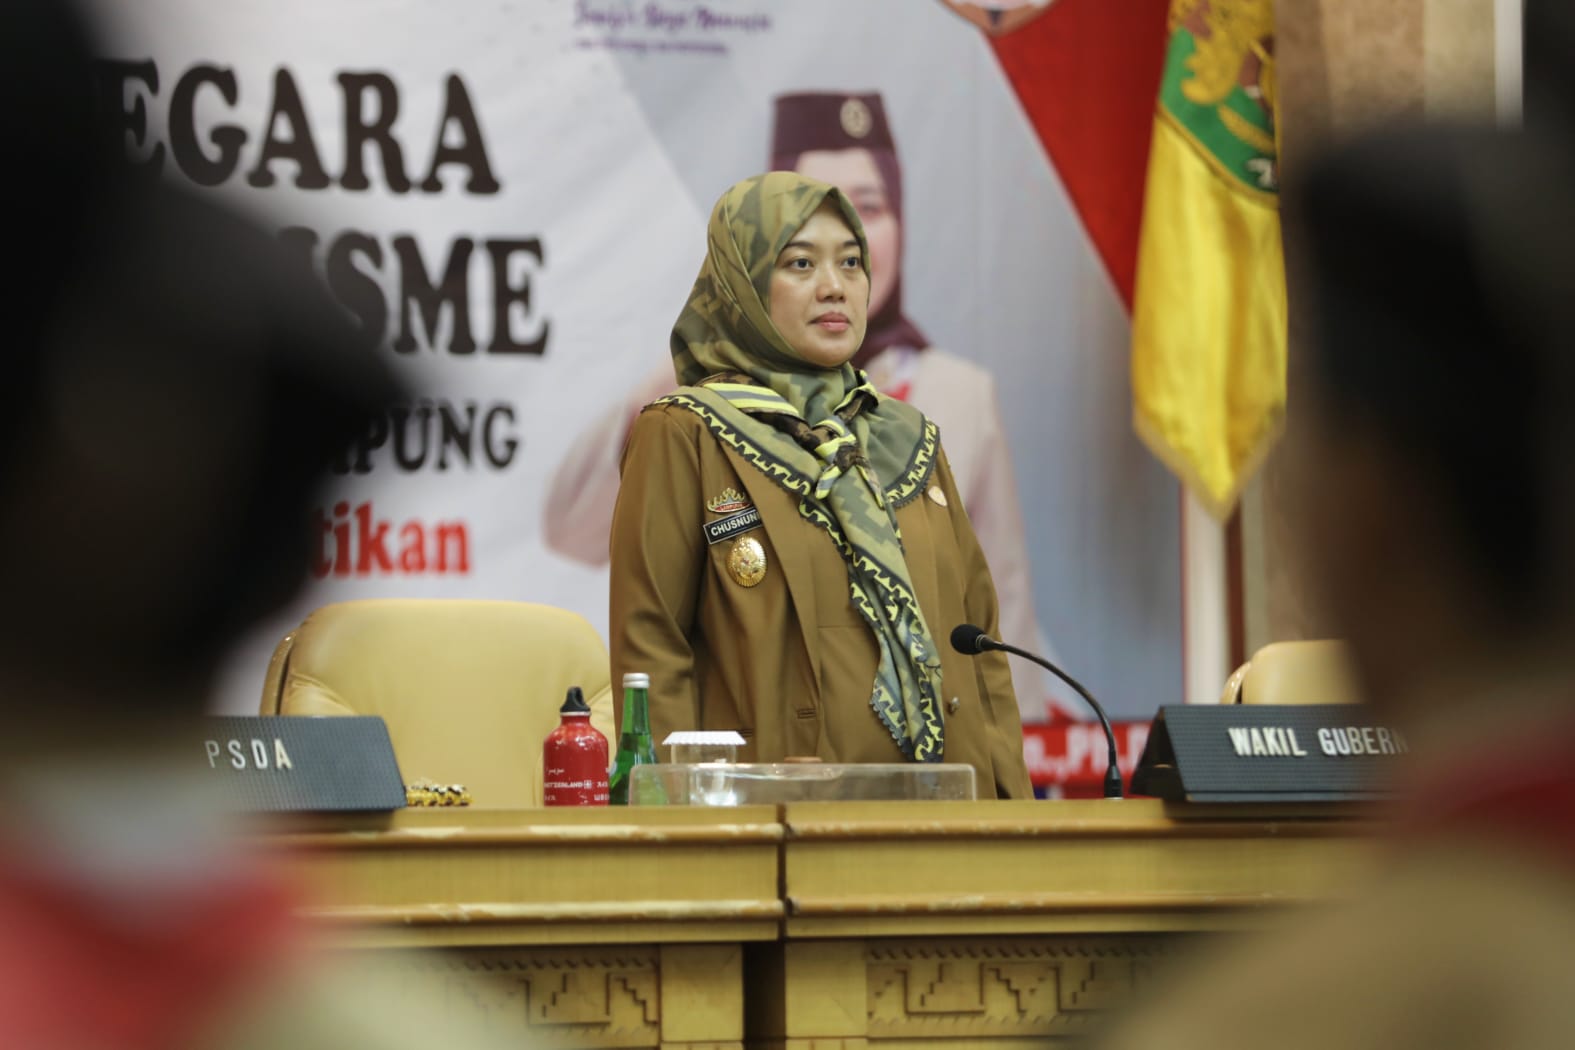 Wagub Chusnunia Buka Workshop Bela Negara dan Bahaya Radikalisme Kwarda Pramuka Provinsi Lampung Tahun 2023